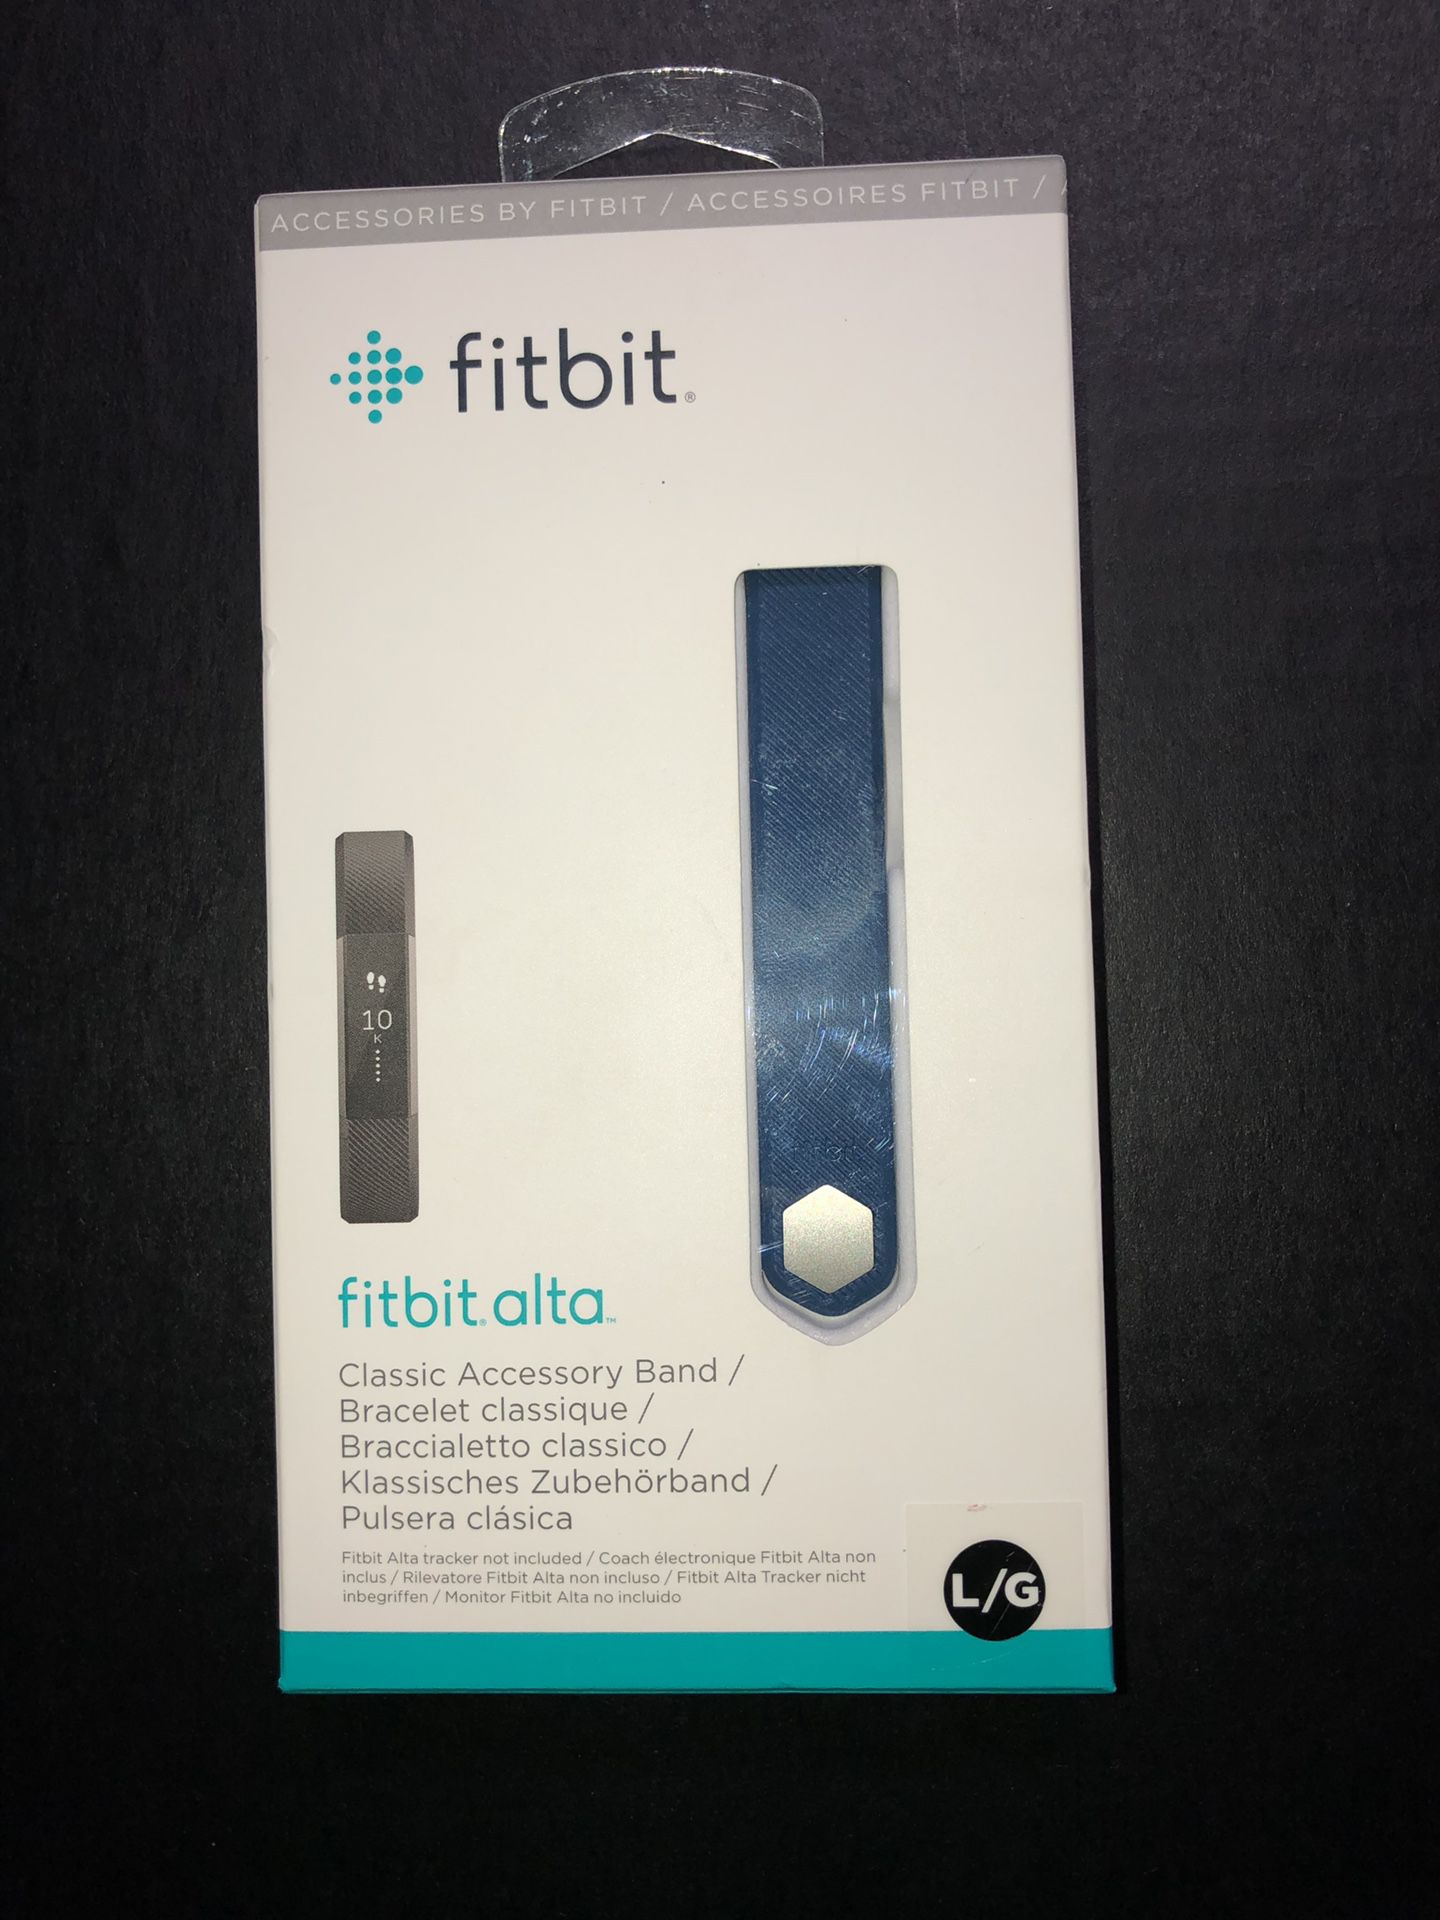 NEW! Genuine OEM Fitbit Alta Band Blue Large L/G